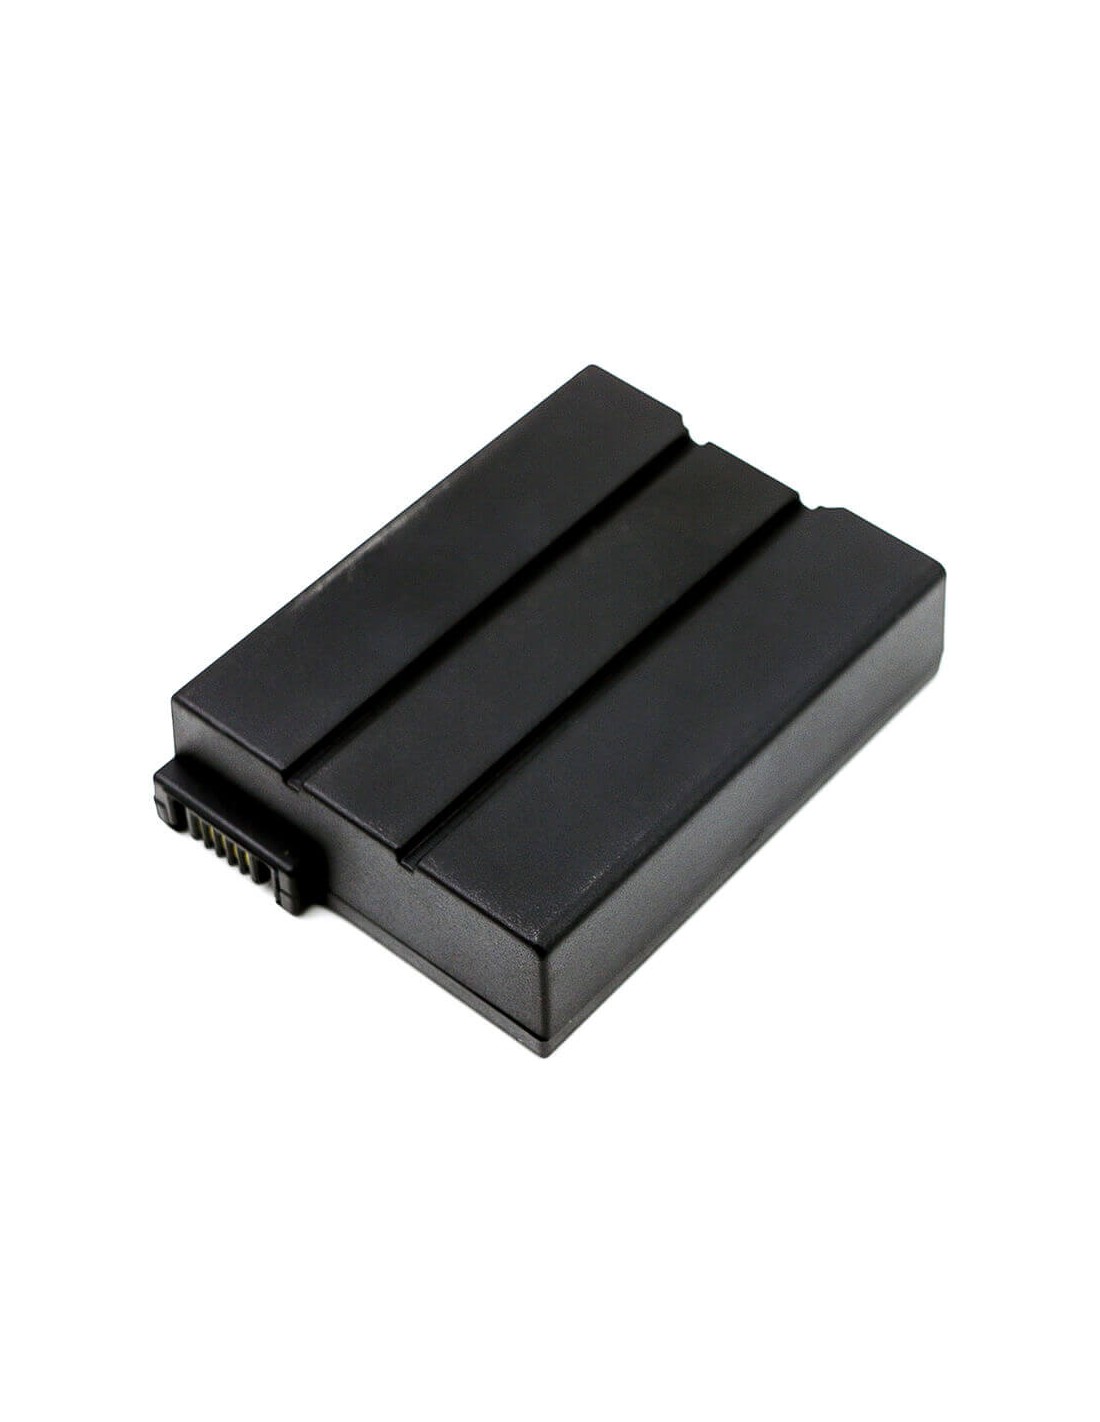 Battery for Pegatron, Dpq3212 10.8V, 3400mAh - 36.72Wh